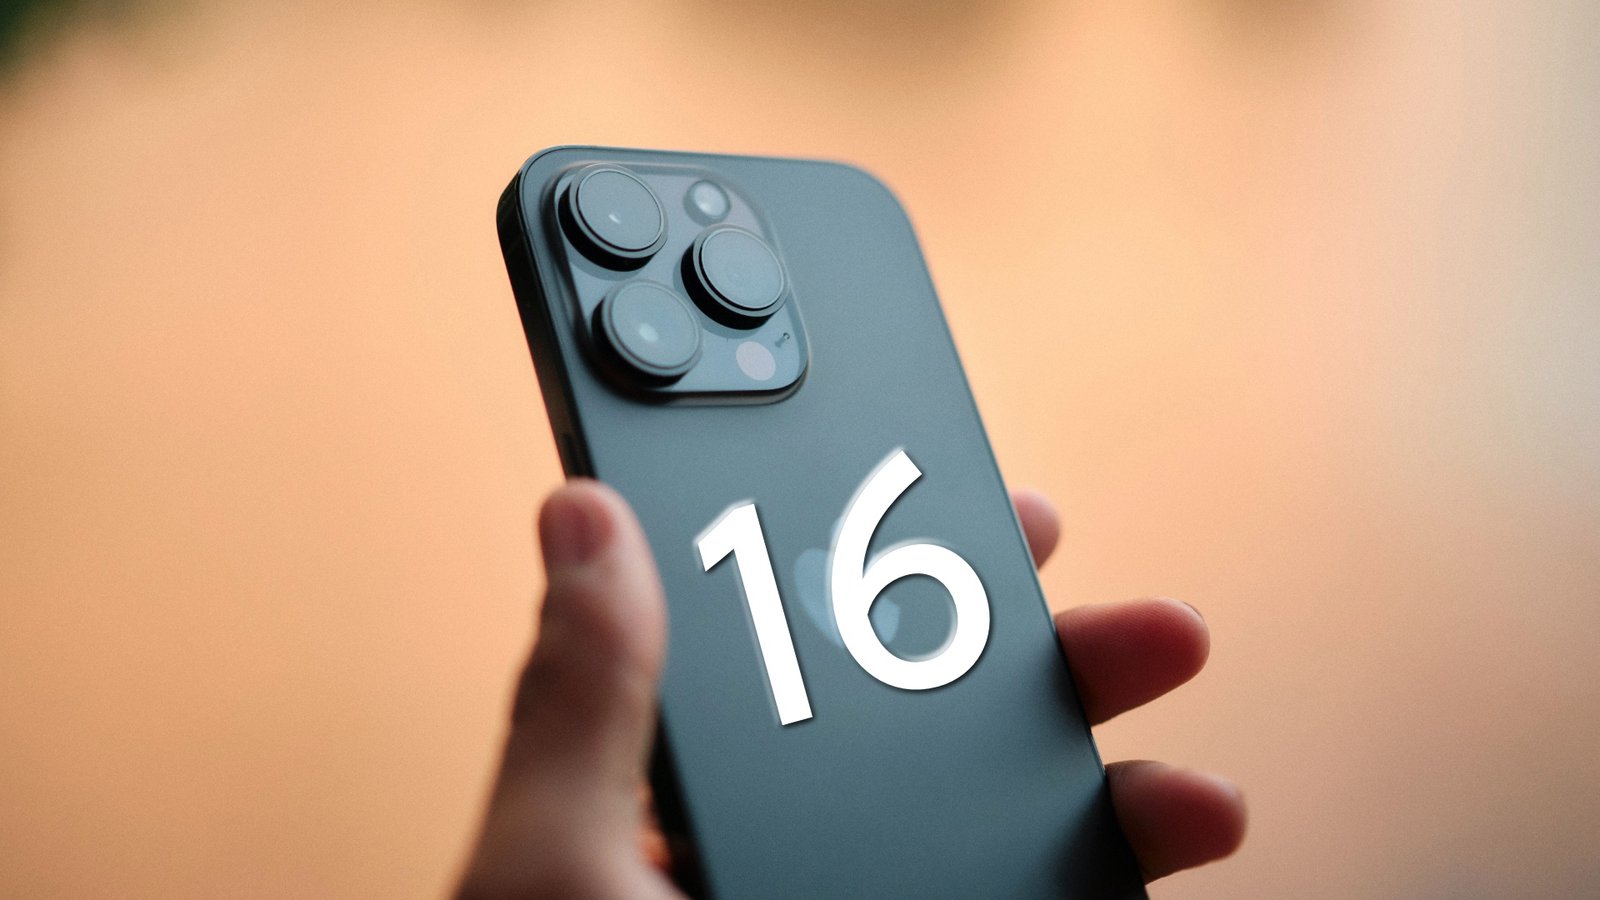 iphone 16